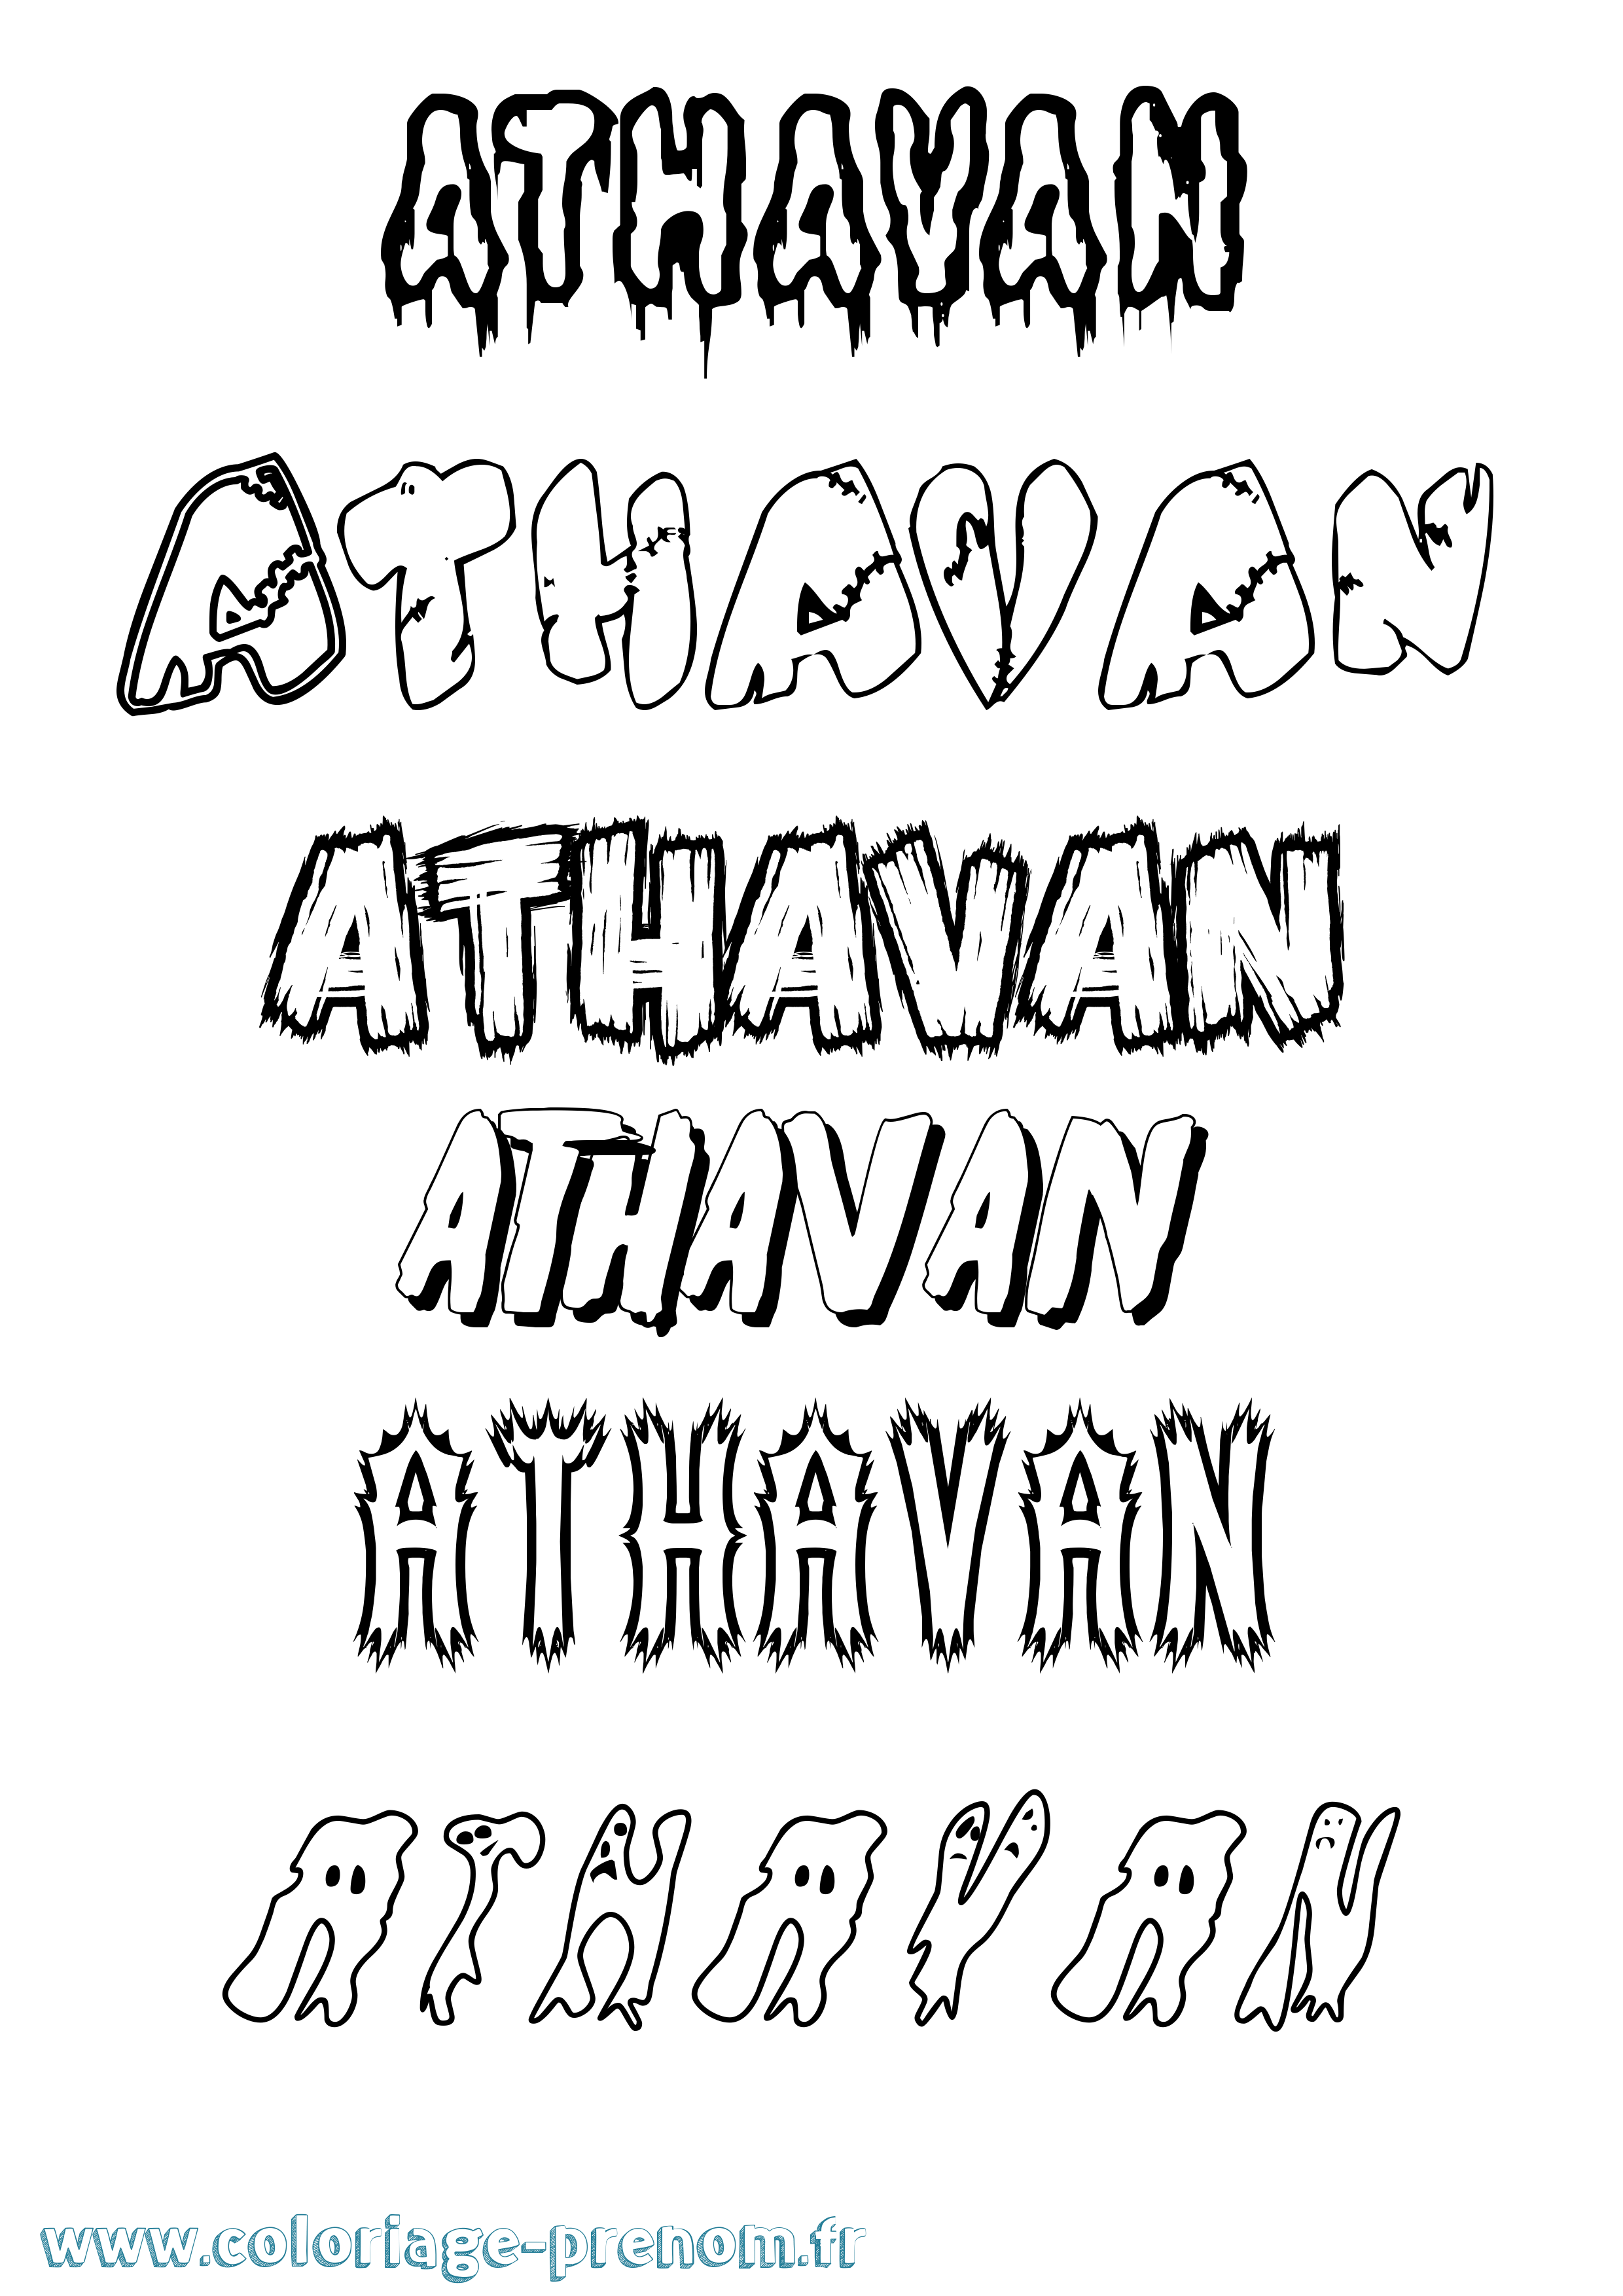 Coloriage prénom Athavan Frisson